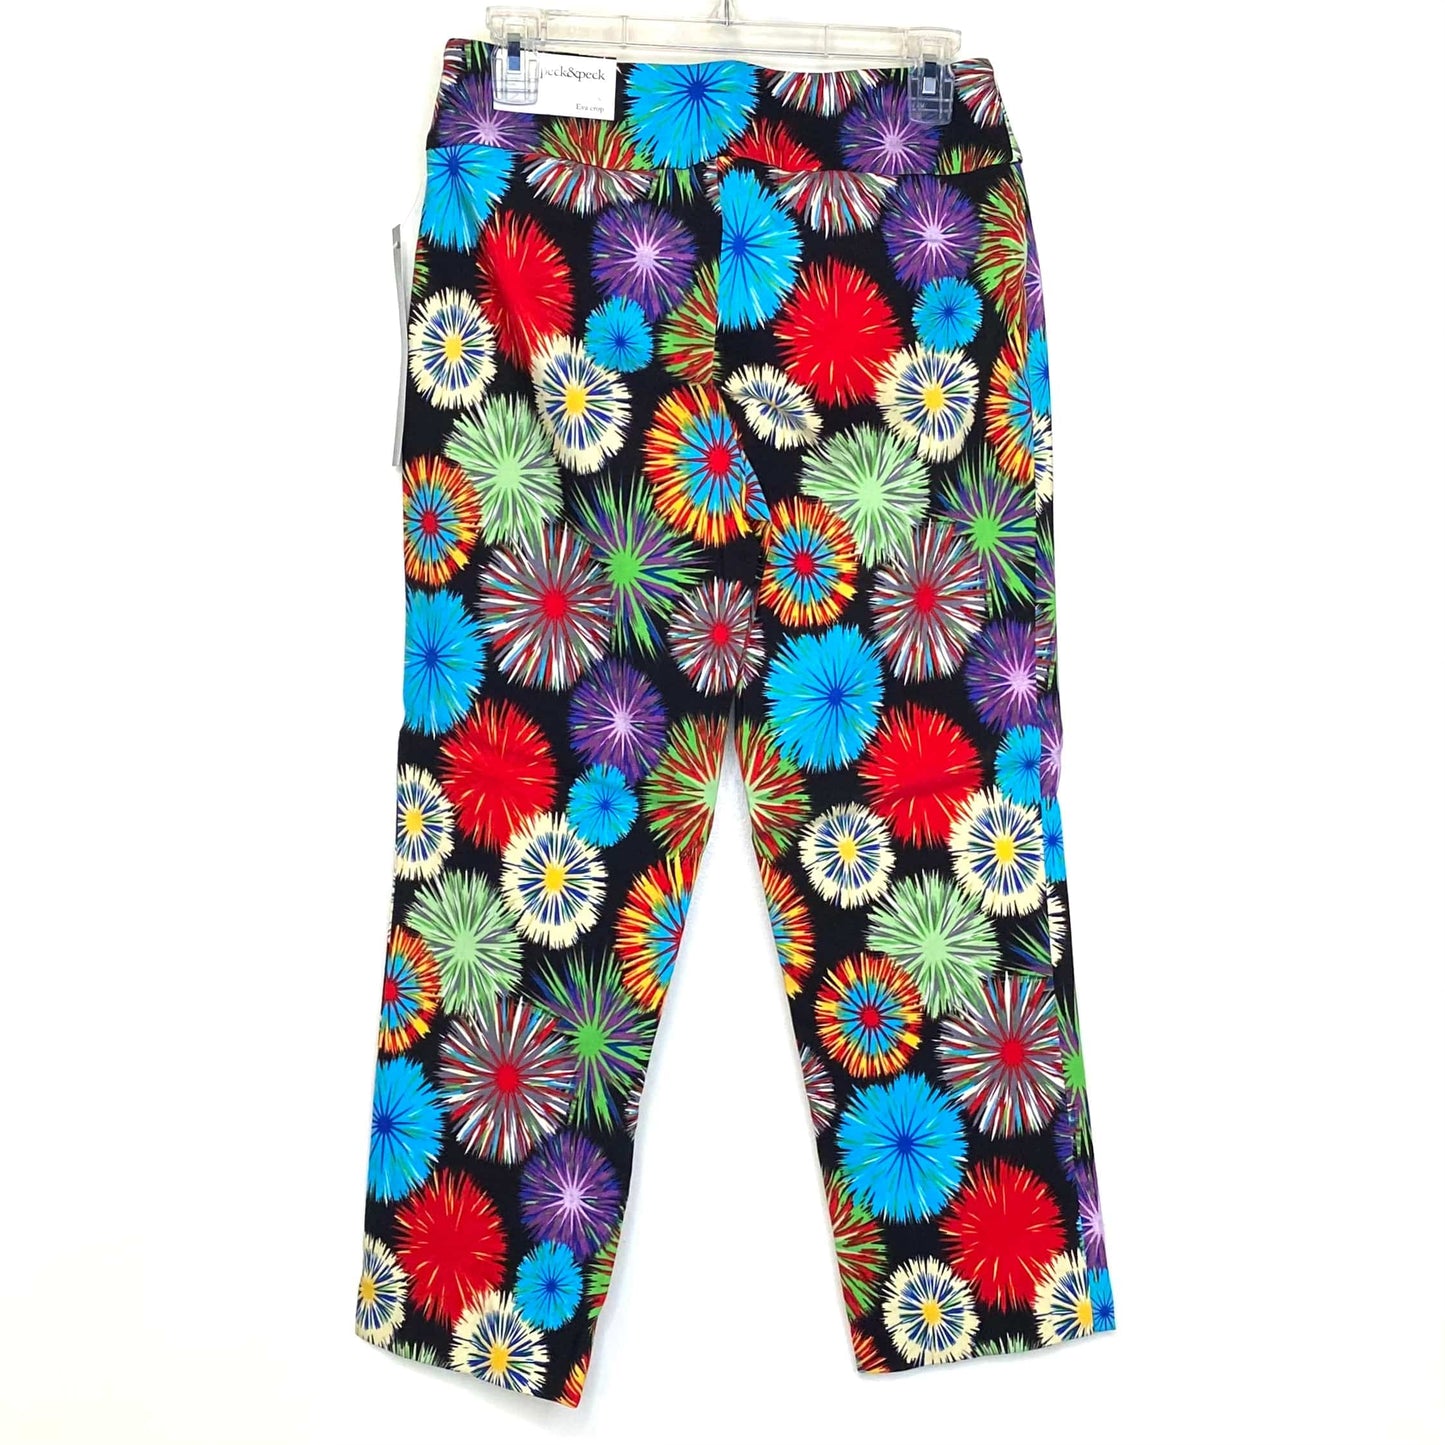 Peck & Peck Womens Size 4 “Eva Crop” Retro Colorful Firework Stretch Capri Pants